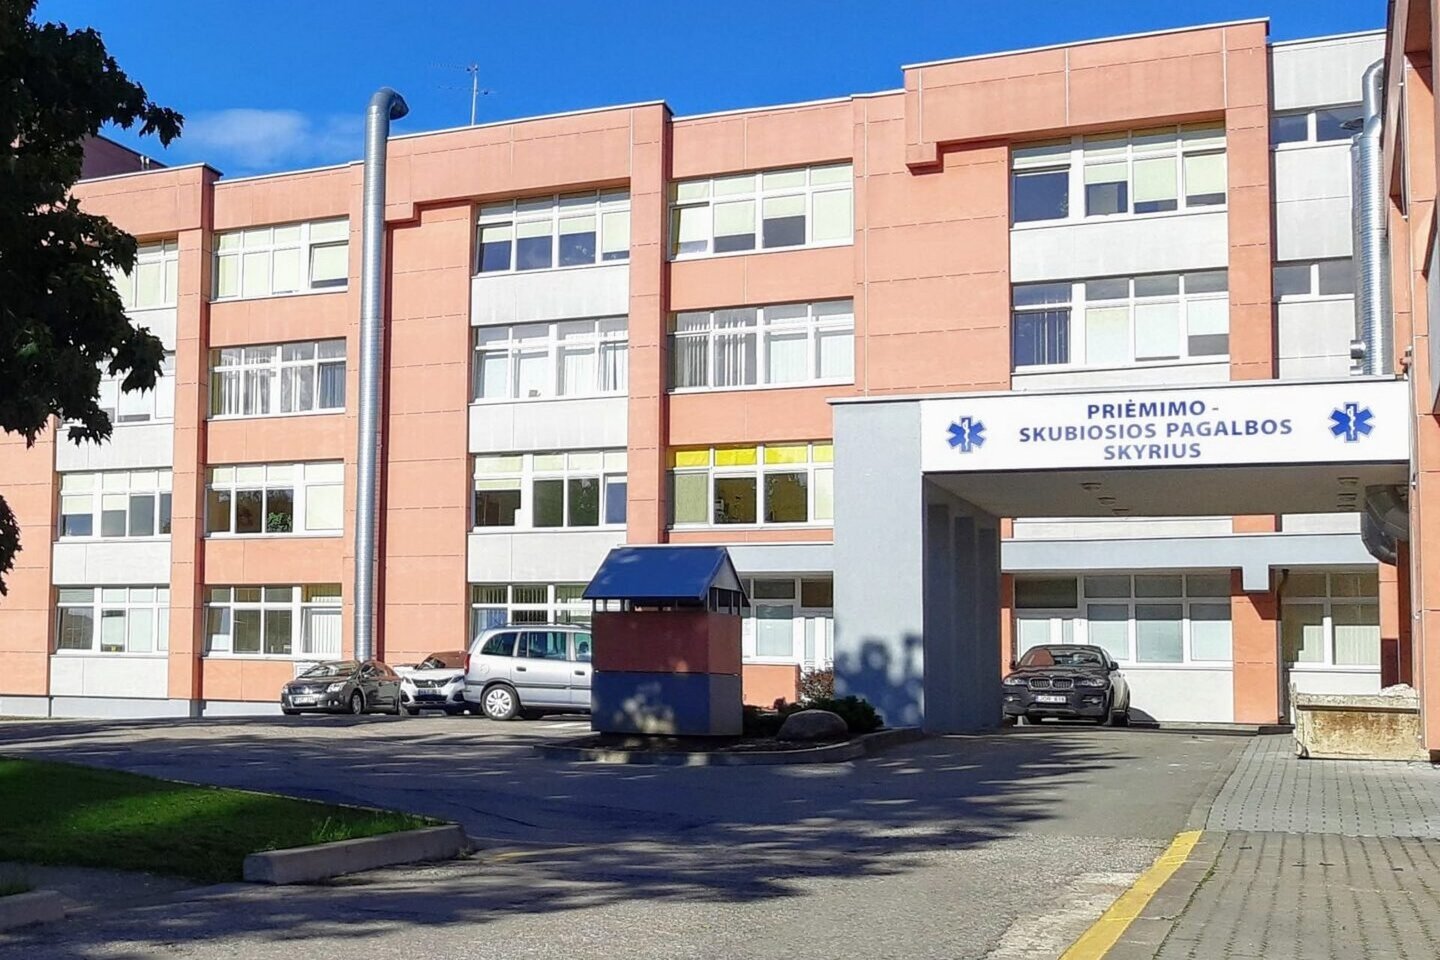  Radviliškio ligoninė tapo koronaviruso židiniu.<br> radviliskioligonine.lt